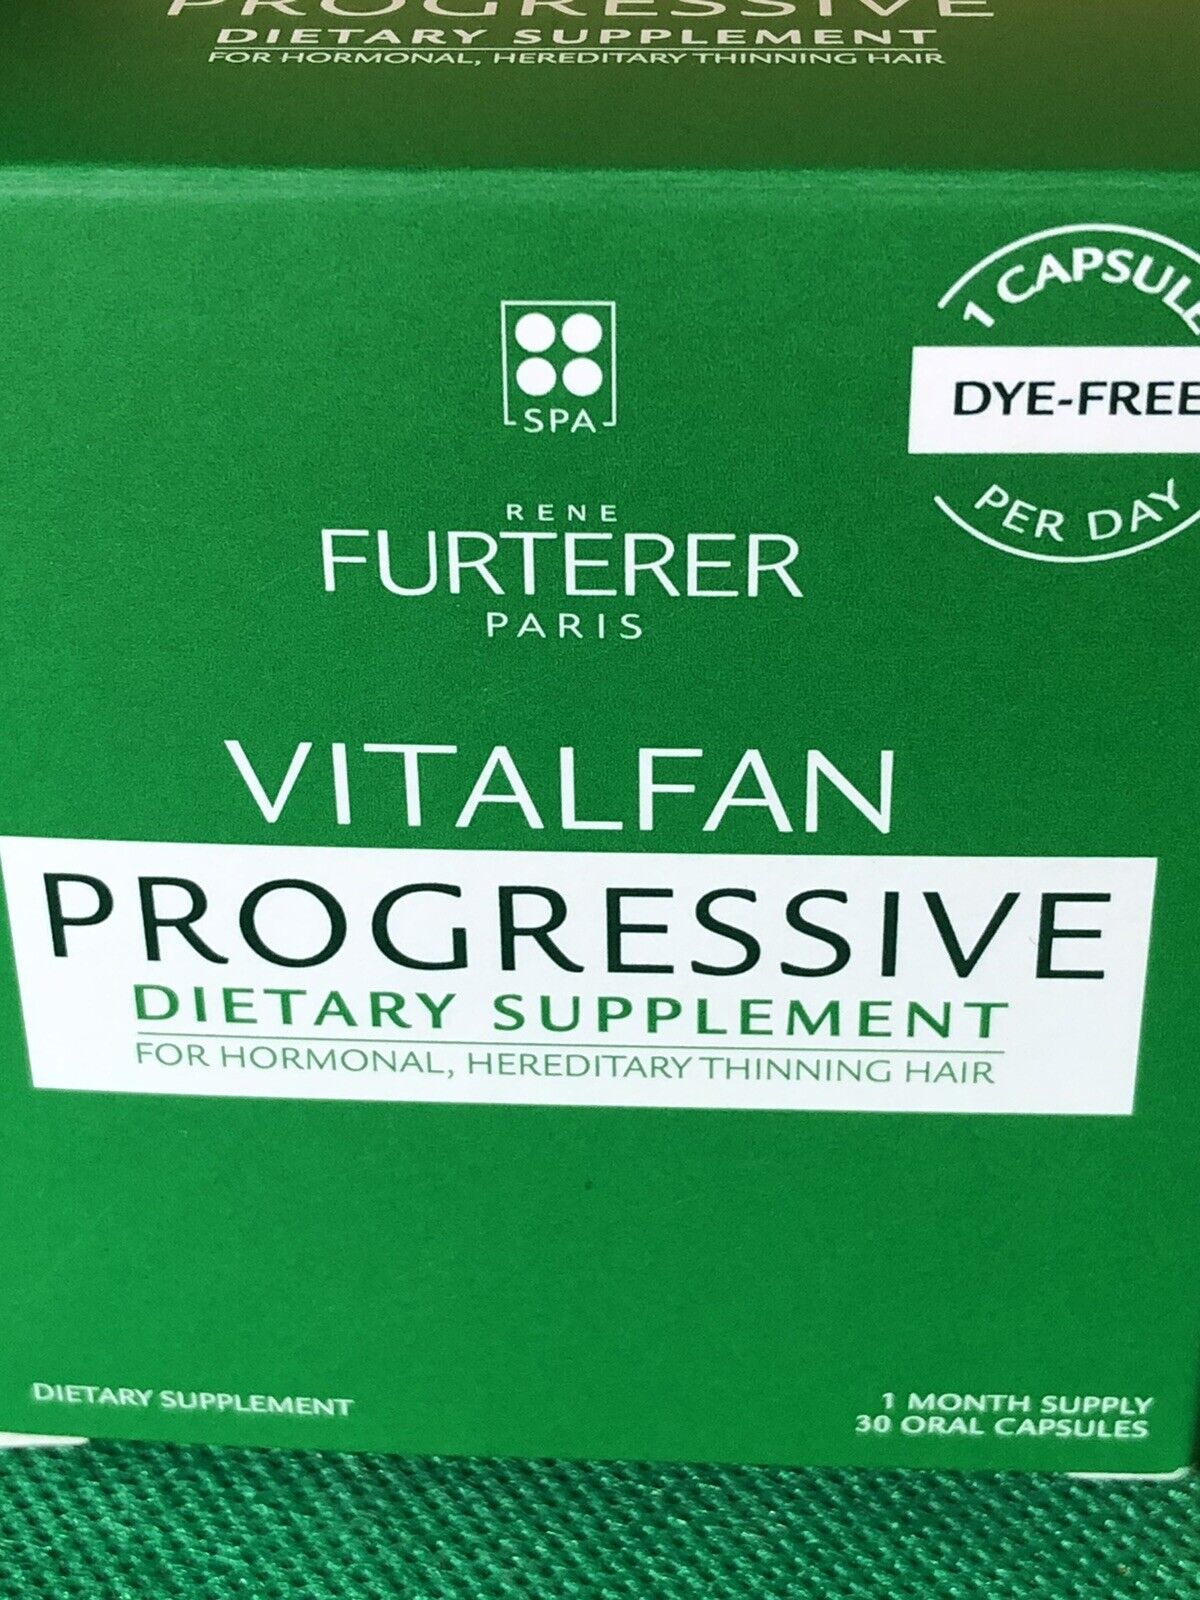 Rene Furterer Vitalfan Progressive 30Caps/1mons NewInBox 7/23 MadeInItaly FreeSH